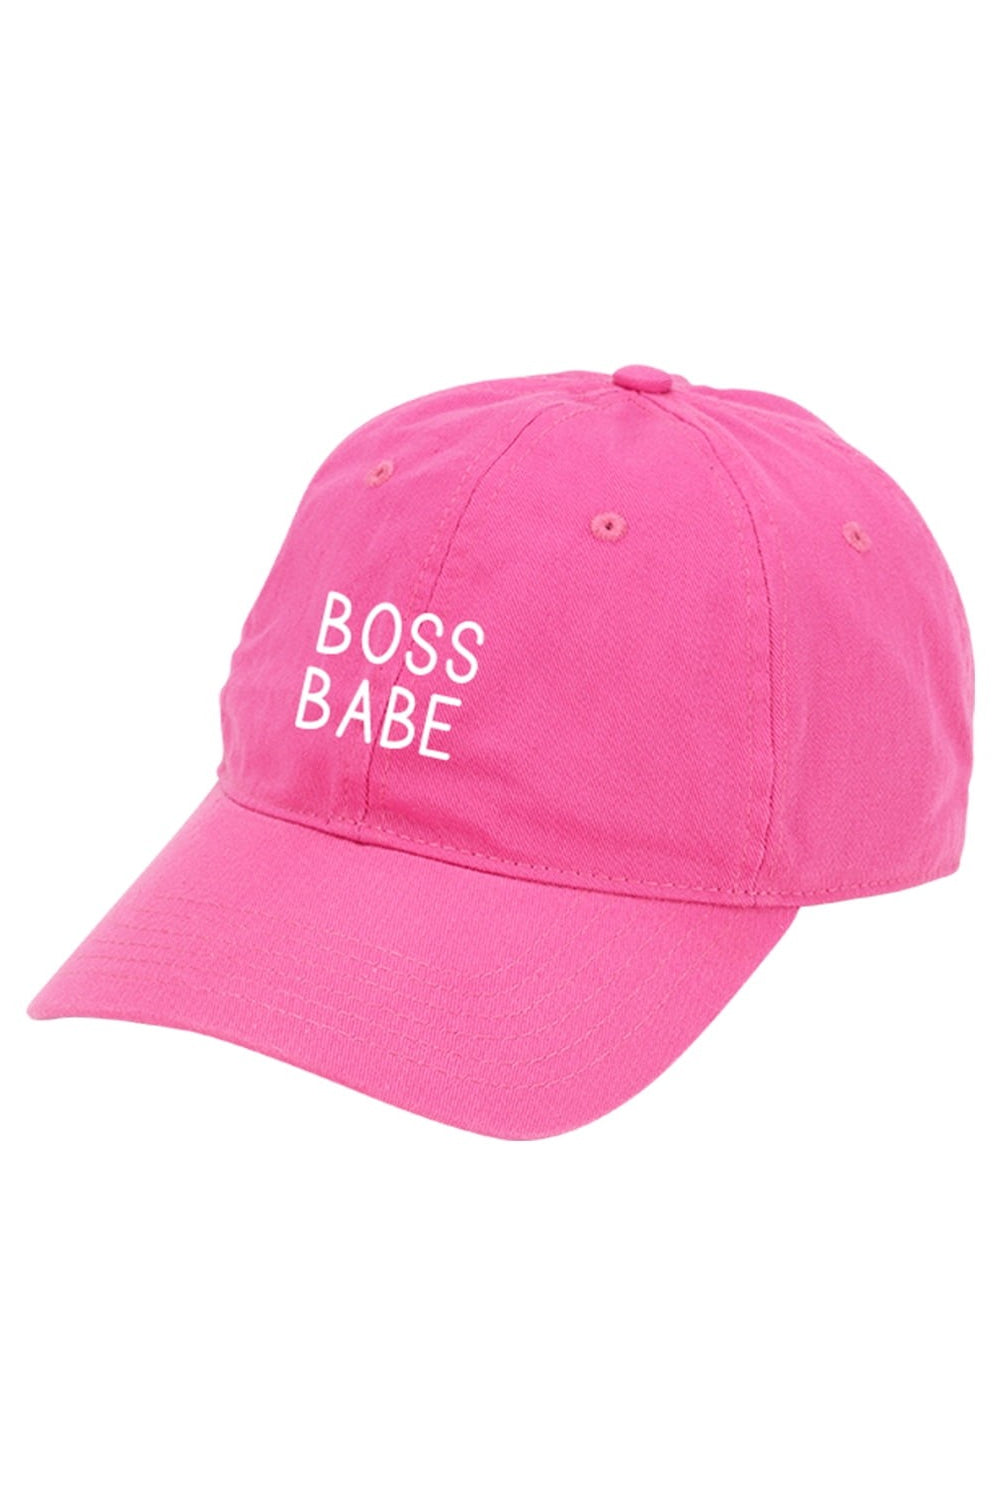 "Boss Babe" Embroidered Cap - Hot Pink | Makk Fashions